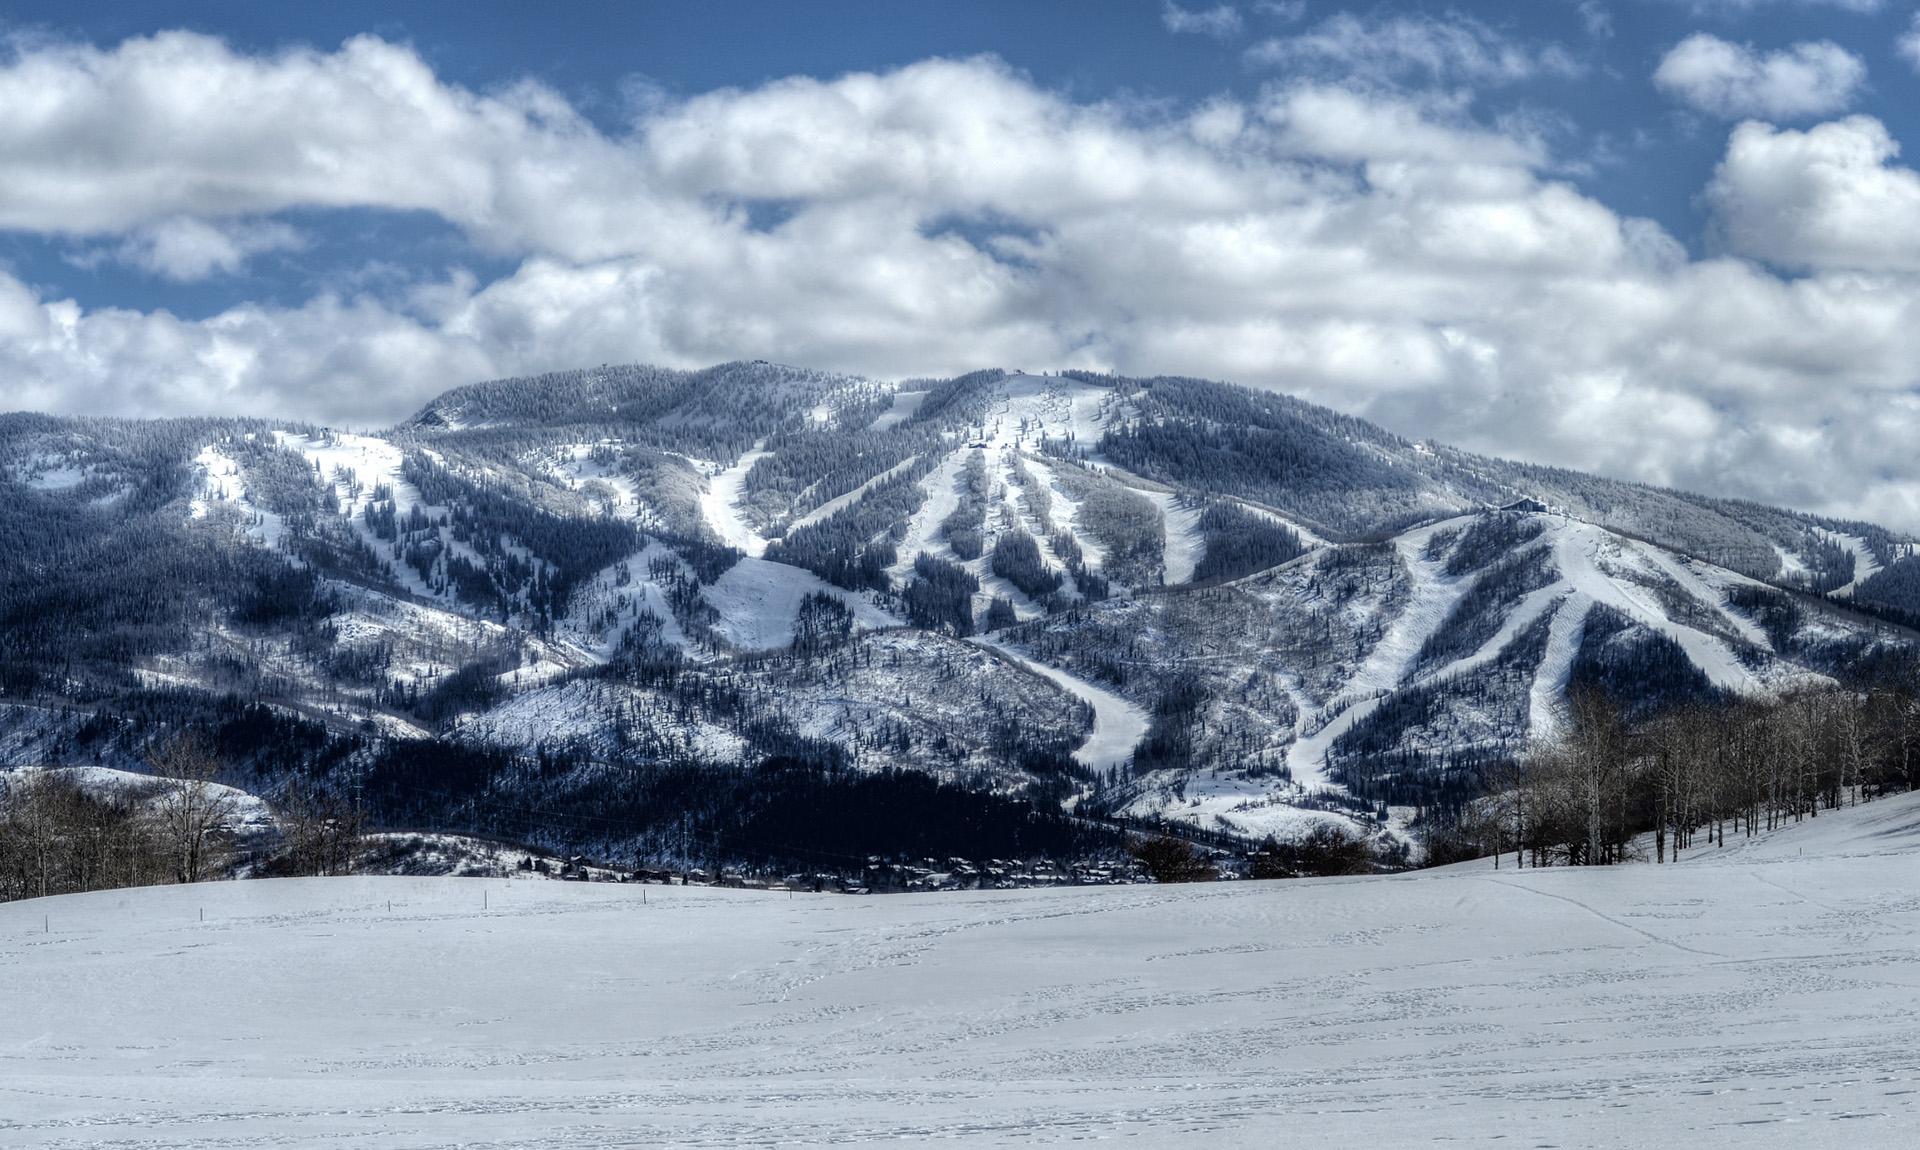 Scenic view of a ski resort